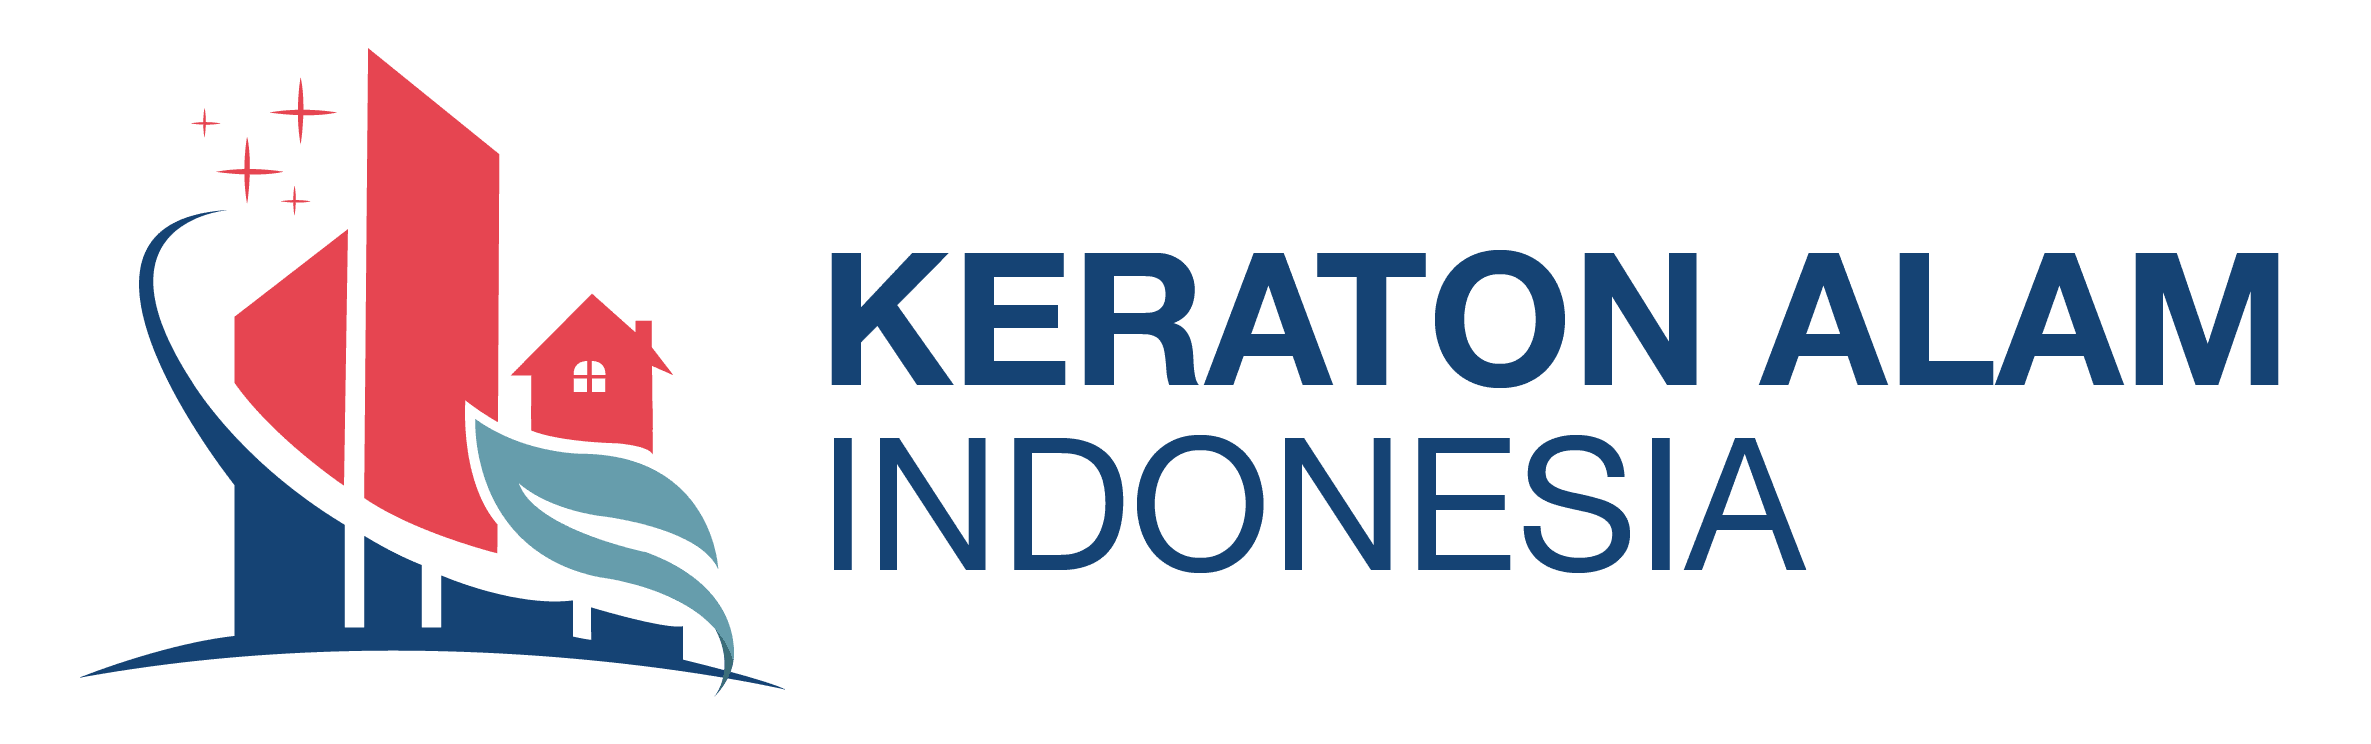 Keraton Alam Indonesia